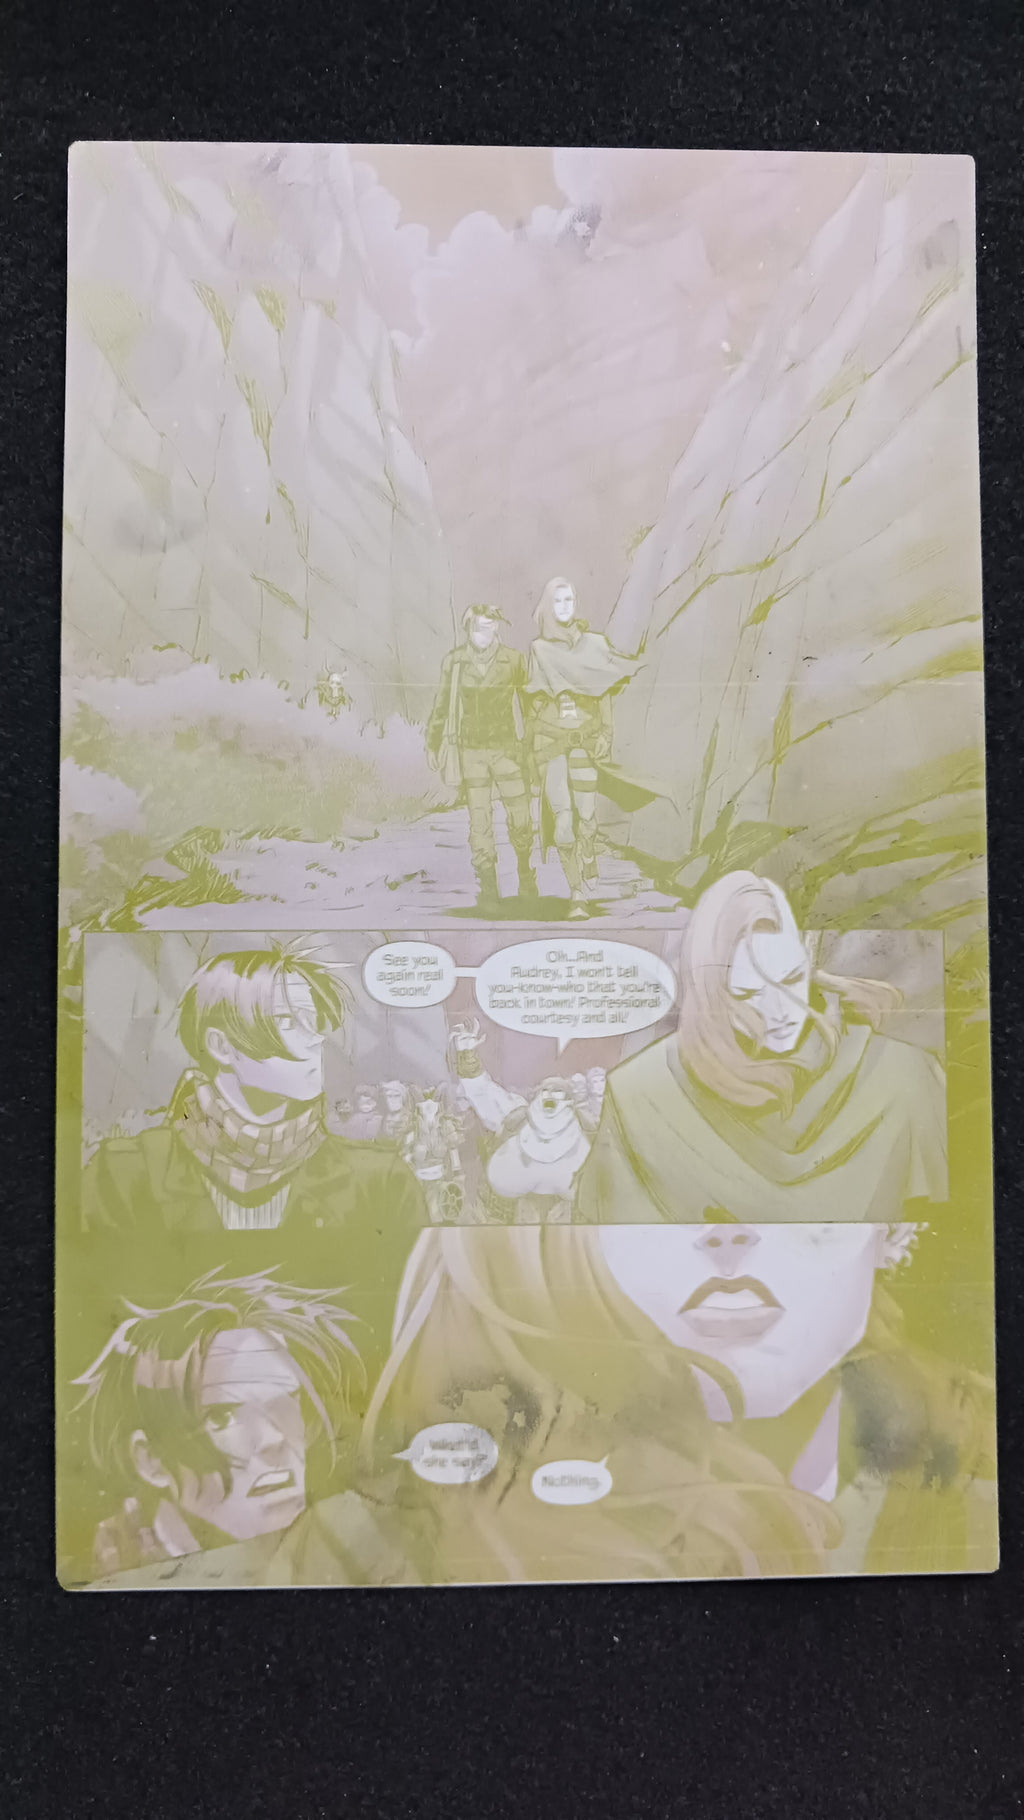 Darkland #3 - Page 15 - PRESSWORKS - Comic Art - Printer Plate - Yellow